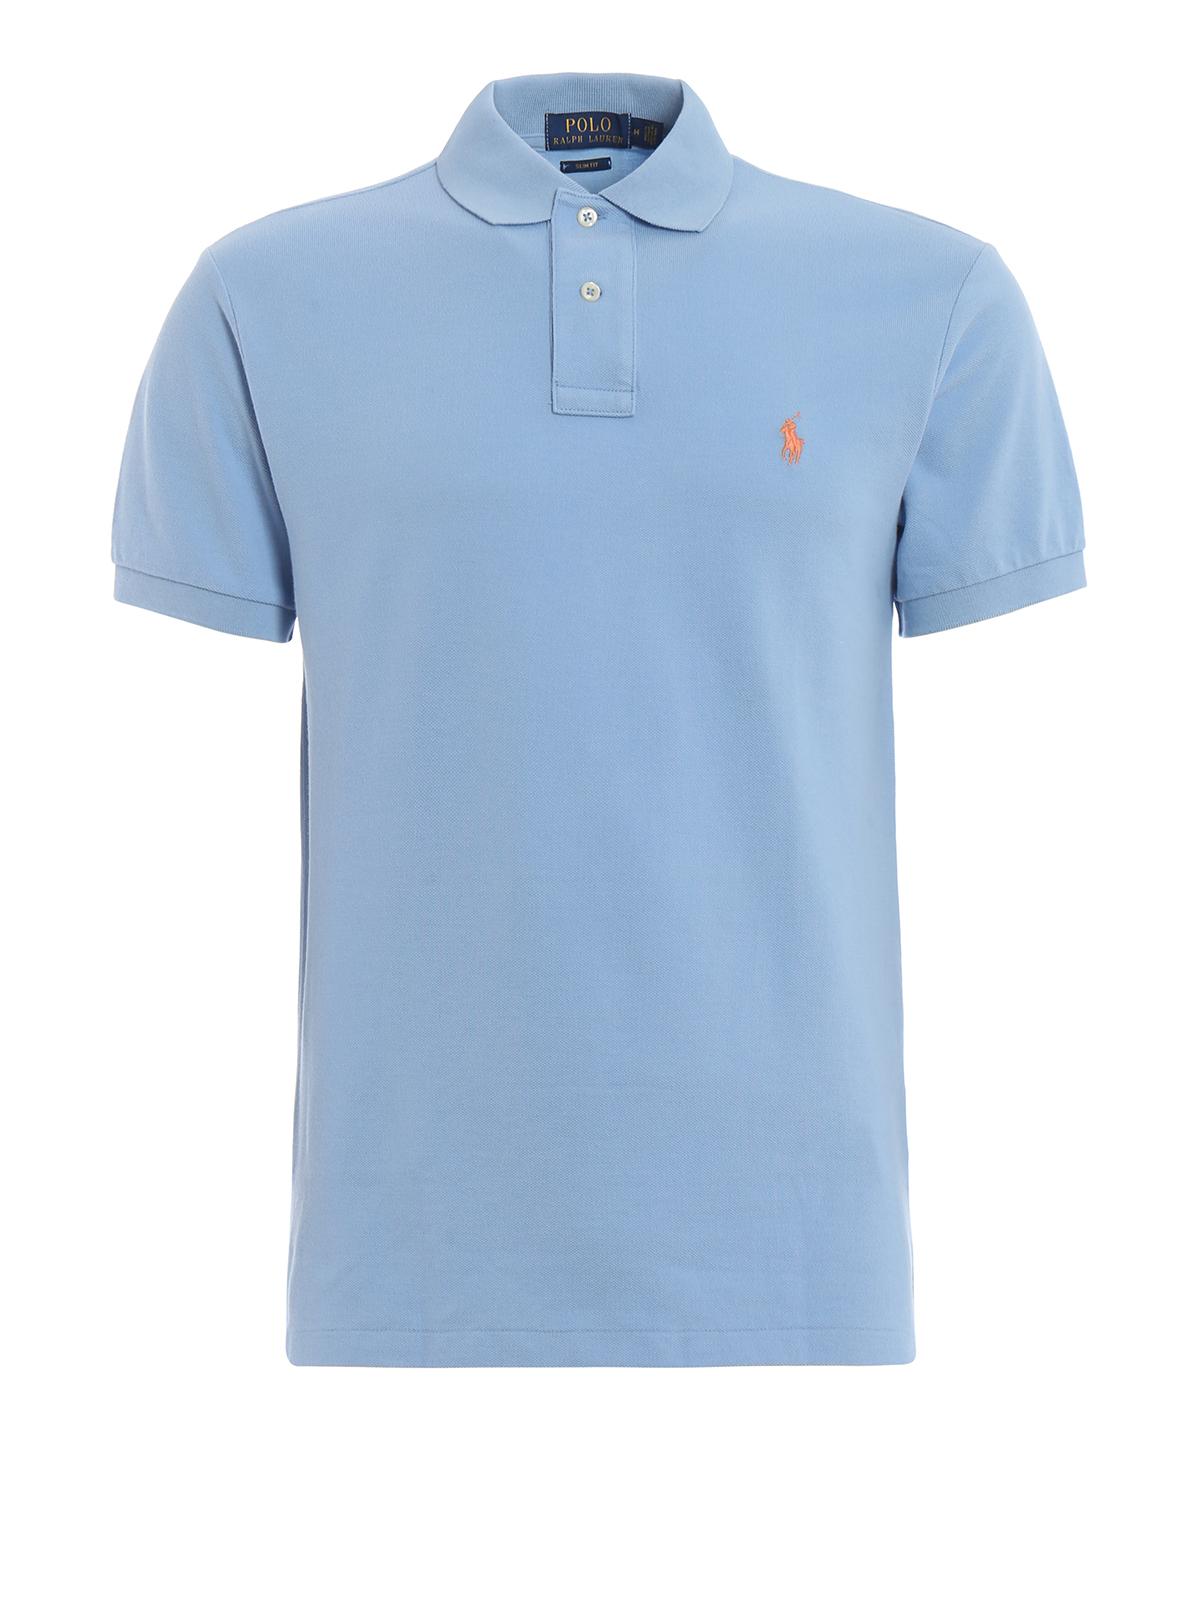 Polo Ralph Lauren Light Blue Pique Cotton Polo Shirt for Men - Lyst